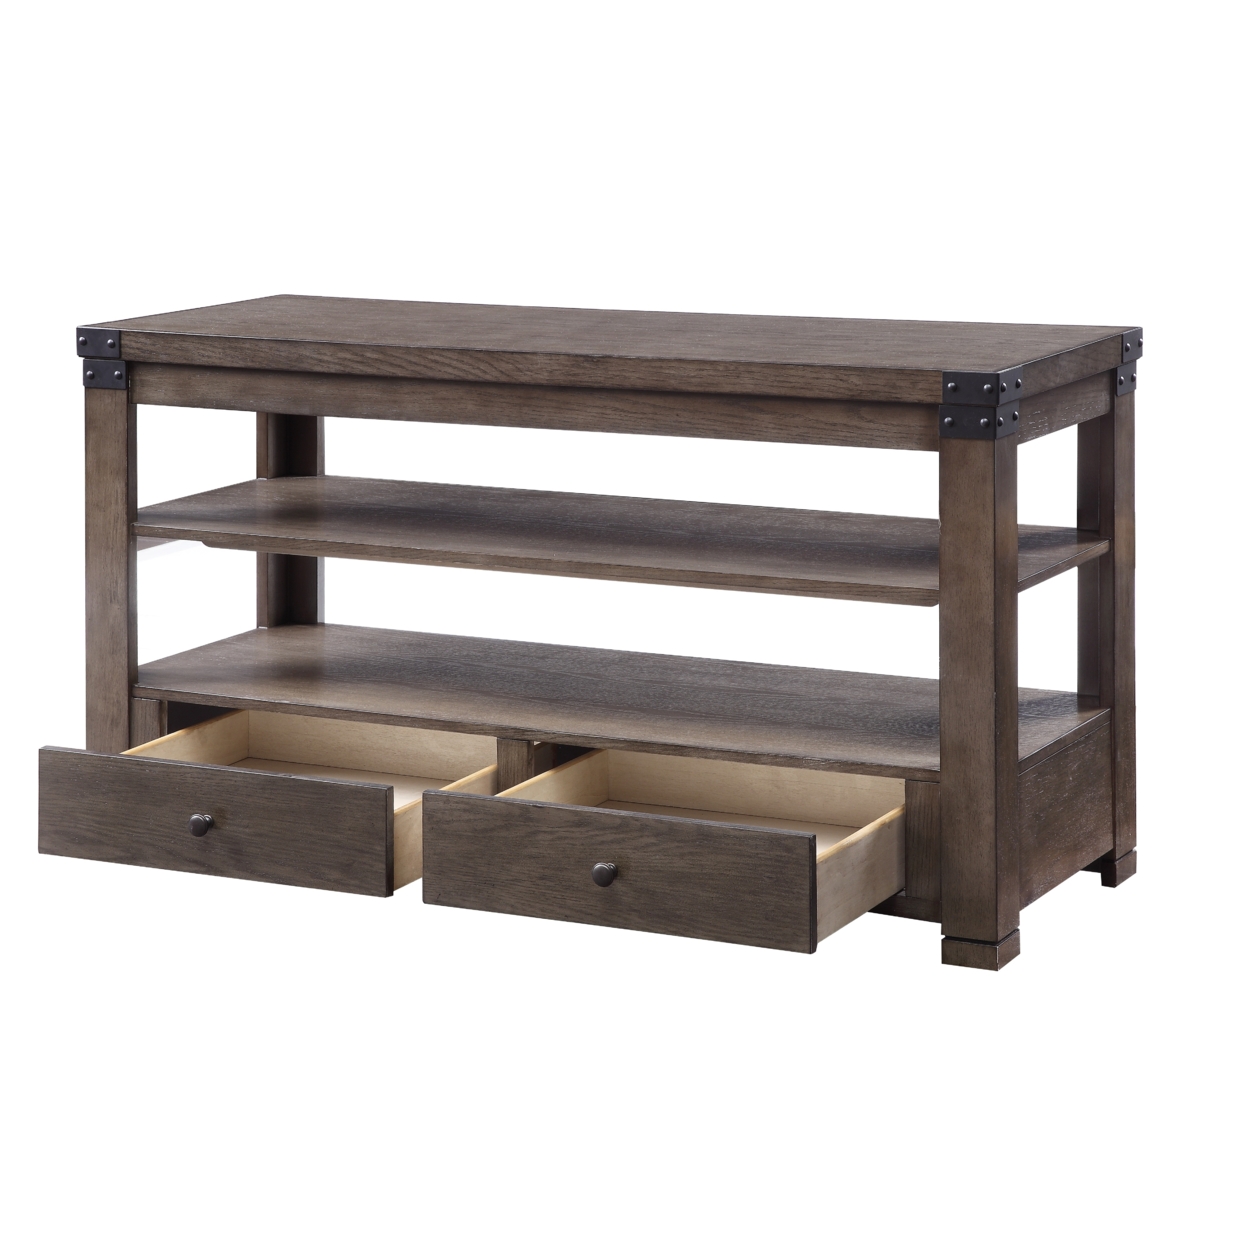 Contemporary Style Wooden Sofa Table With Two Open Shelves, Gray- Saltoro Sherpi